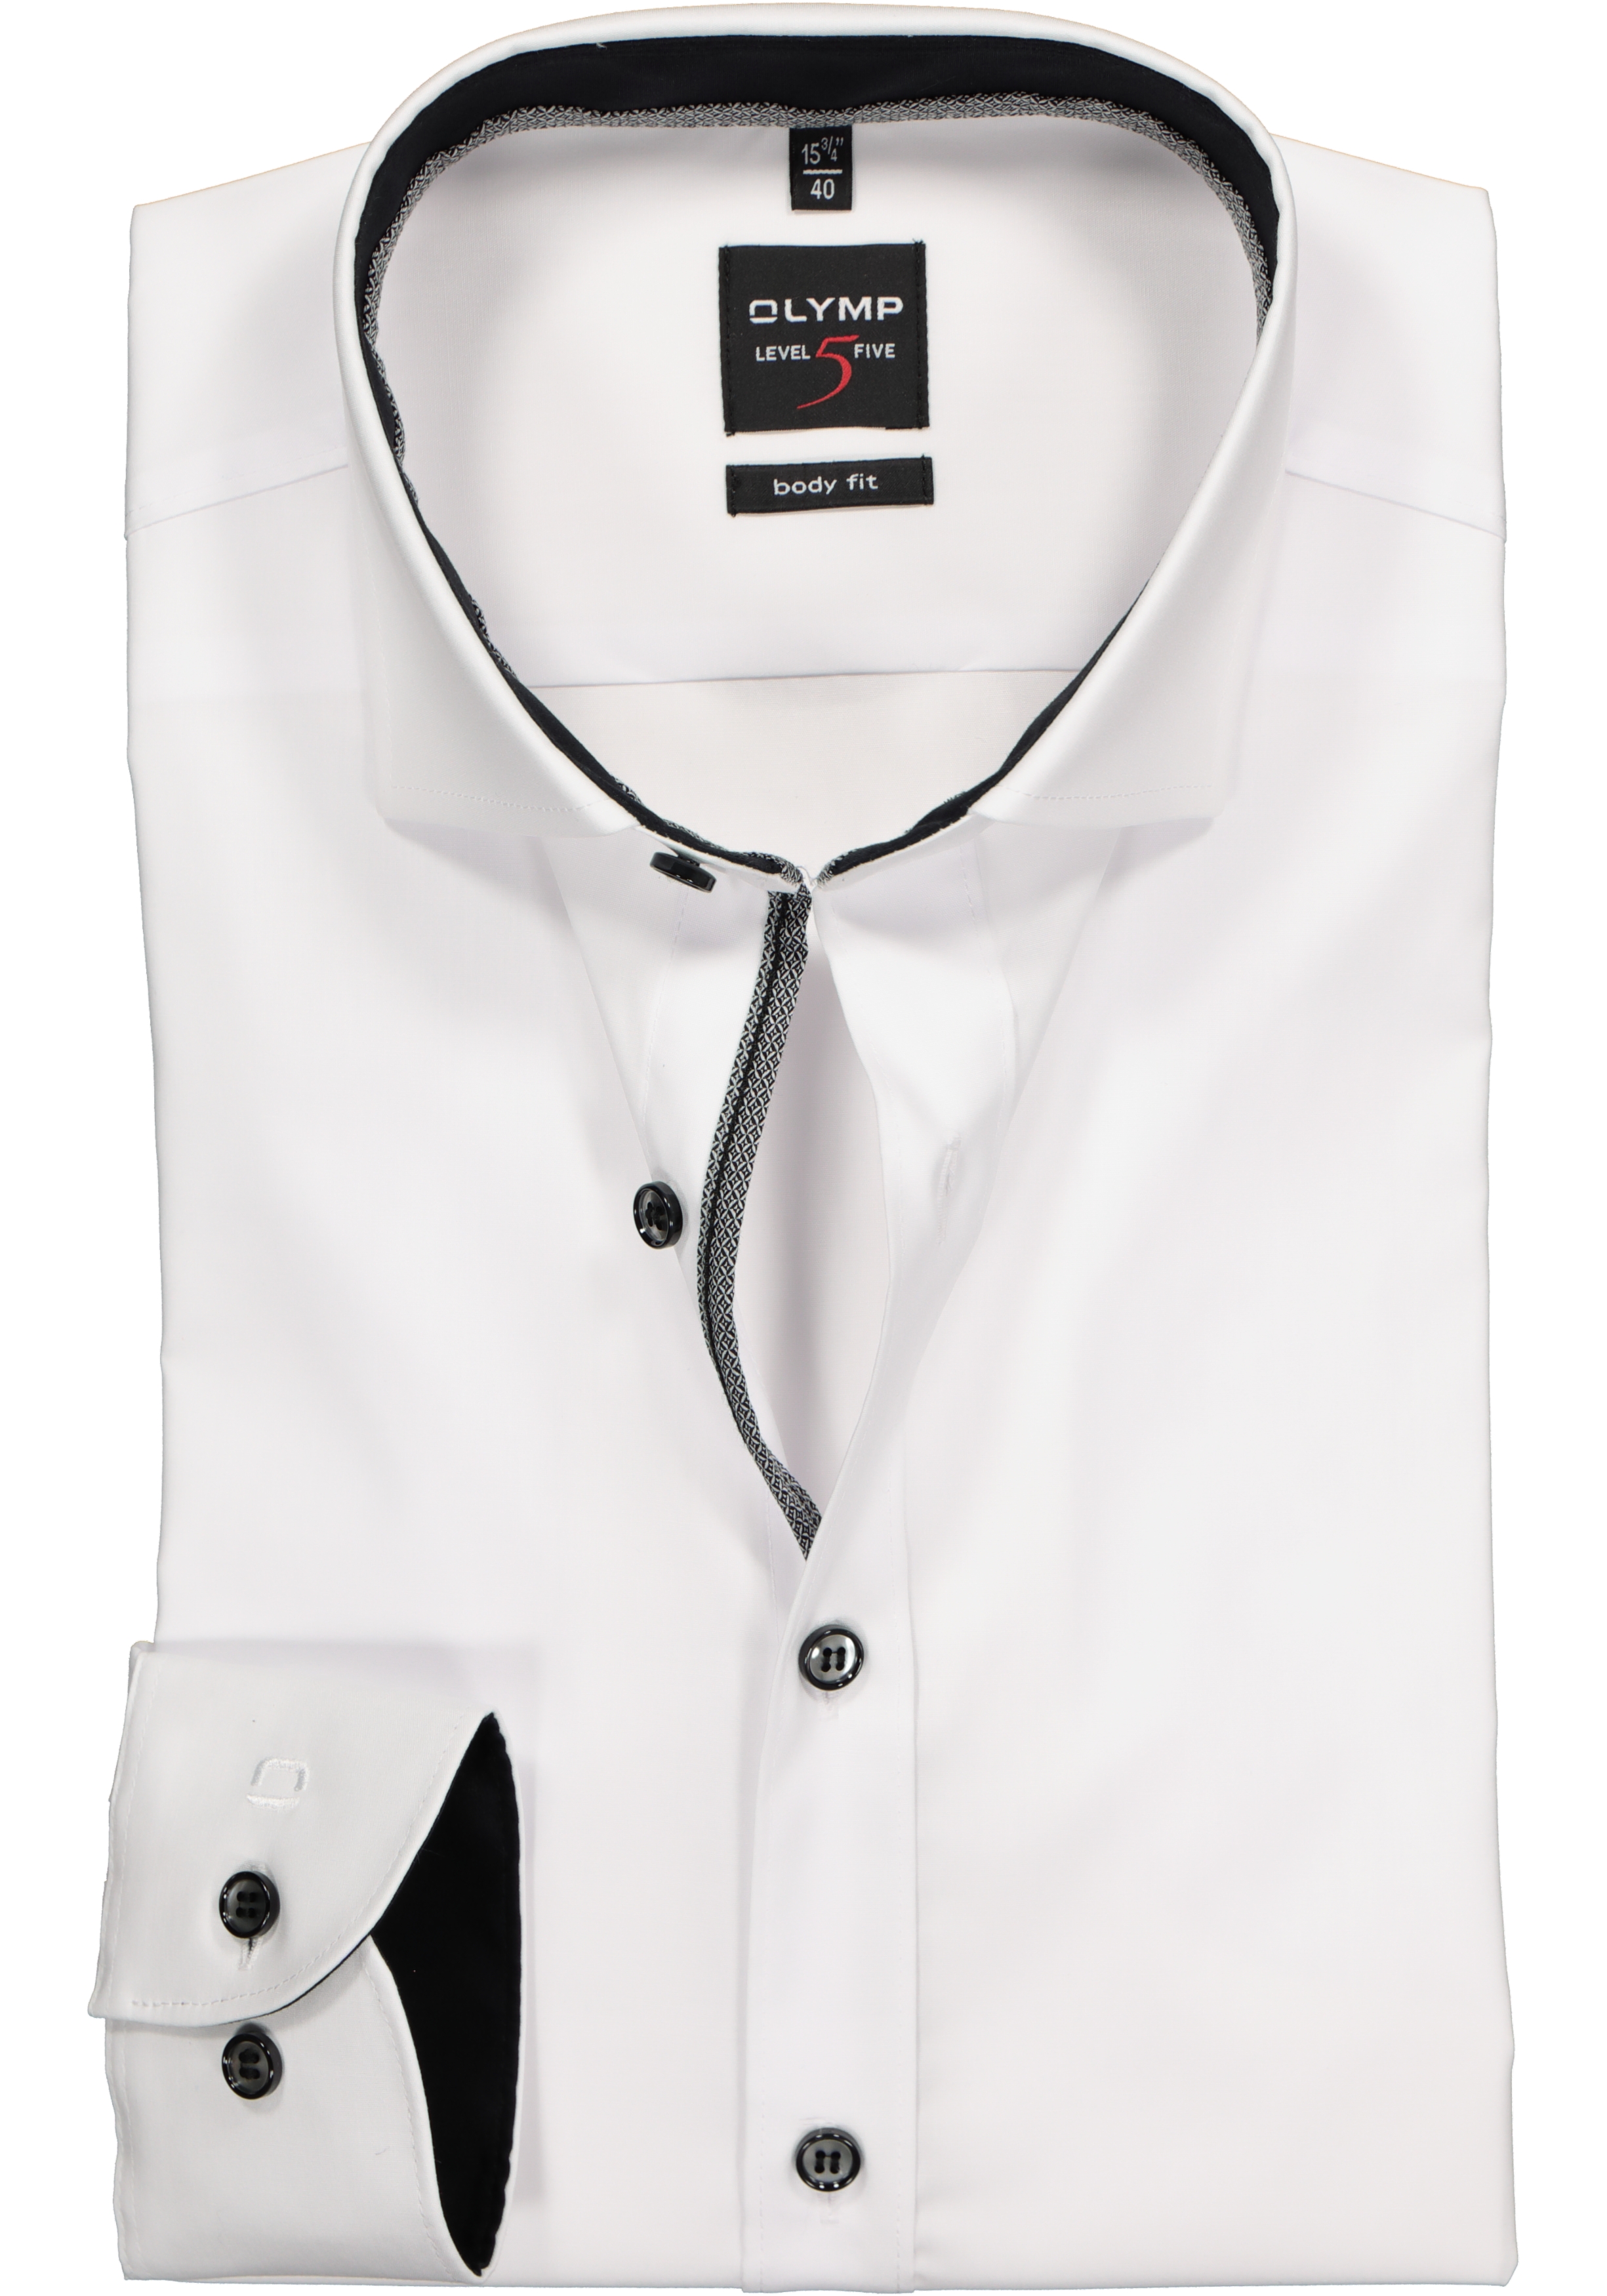 OLYMP Level 5 body fit overhemd, wit (zwart contrast)